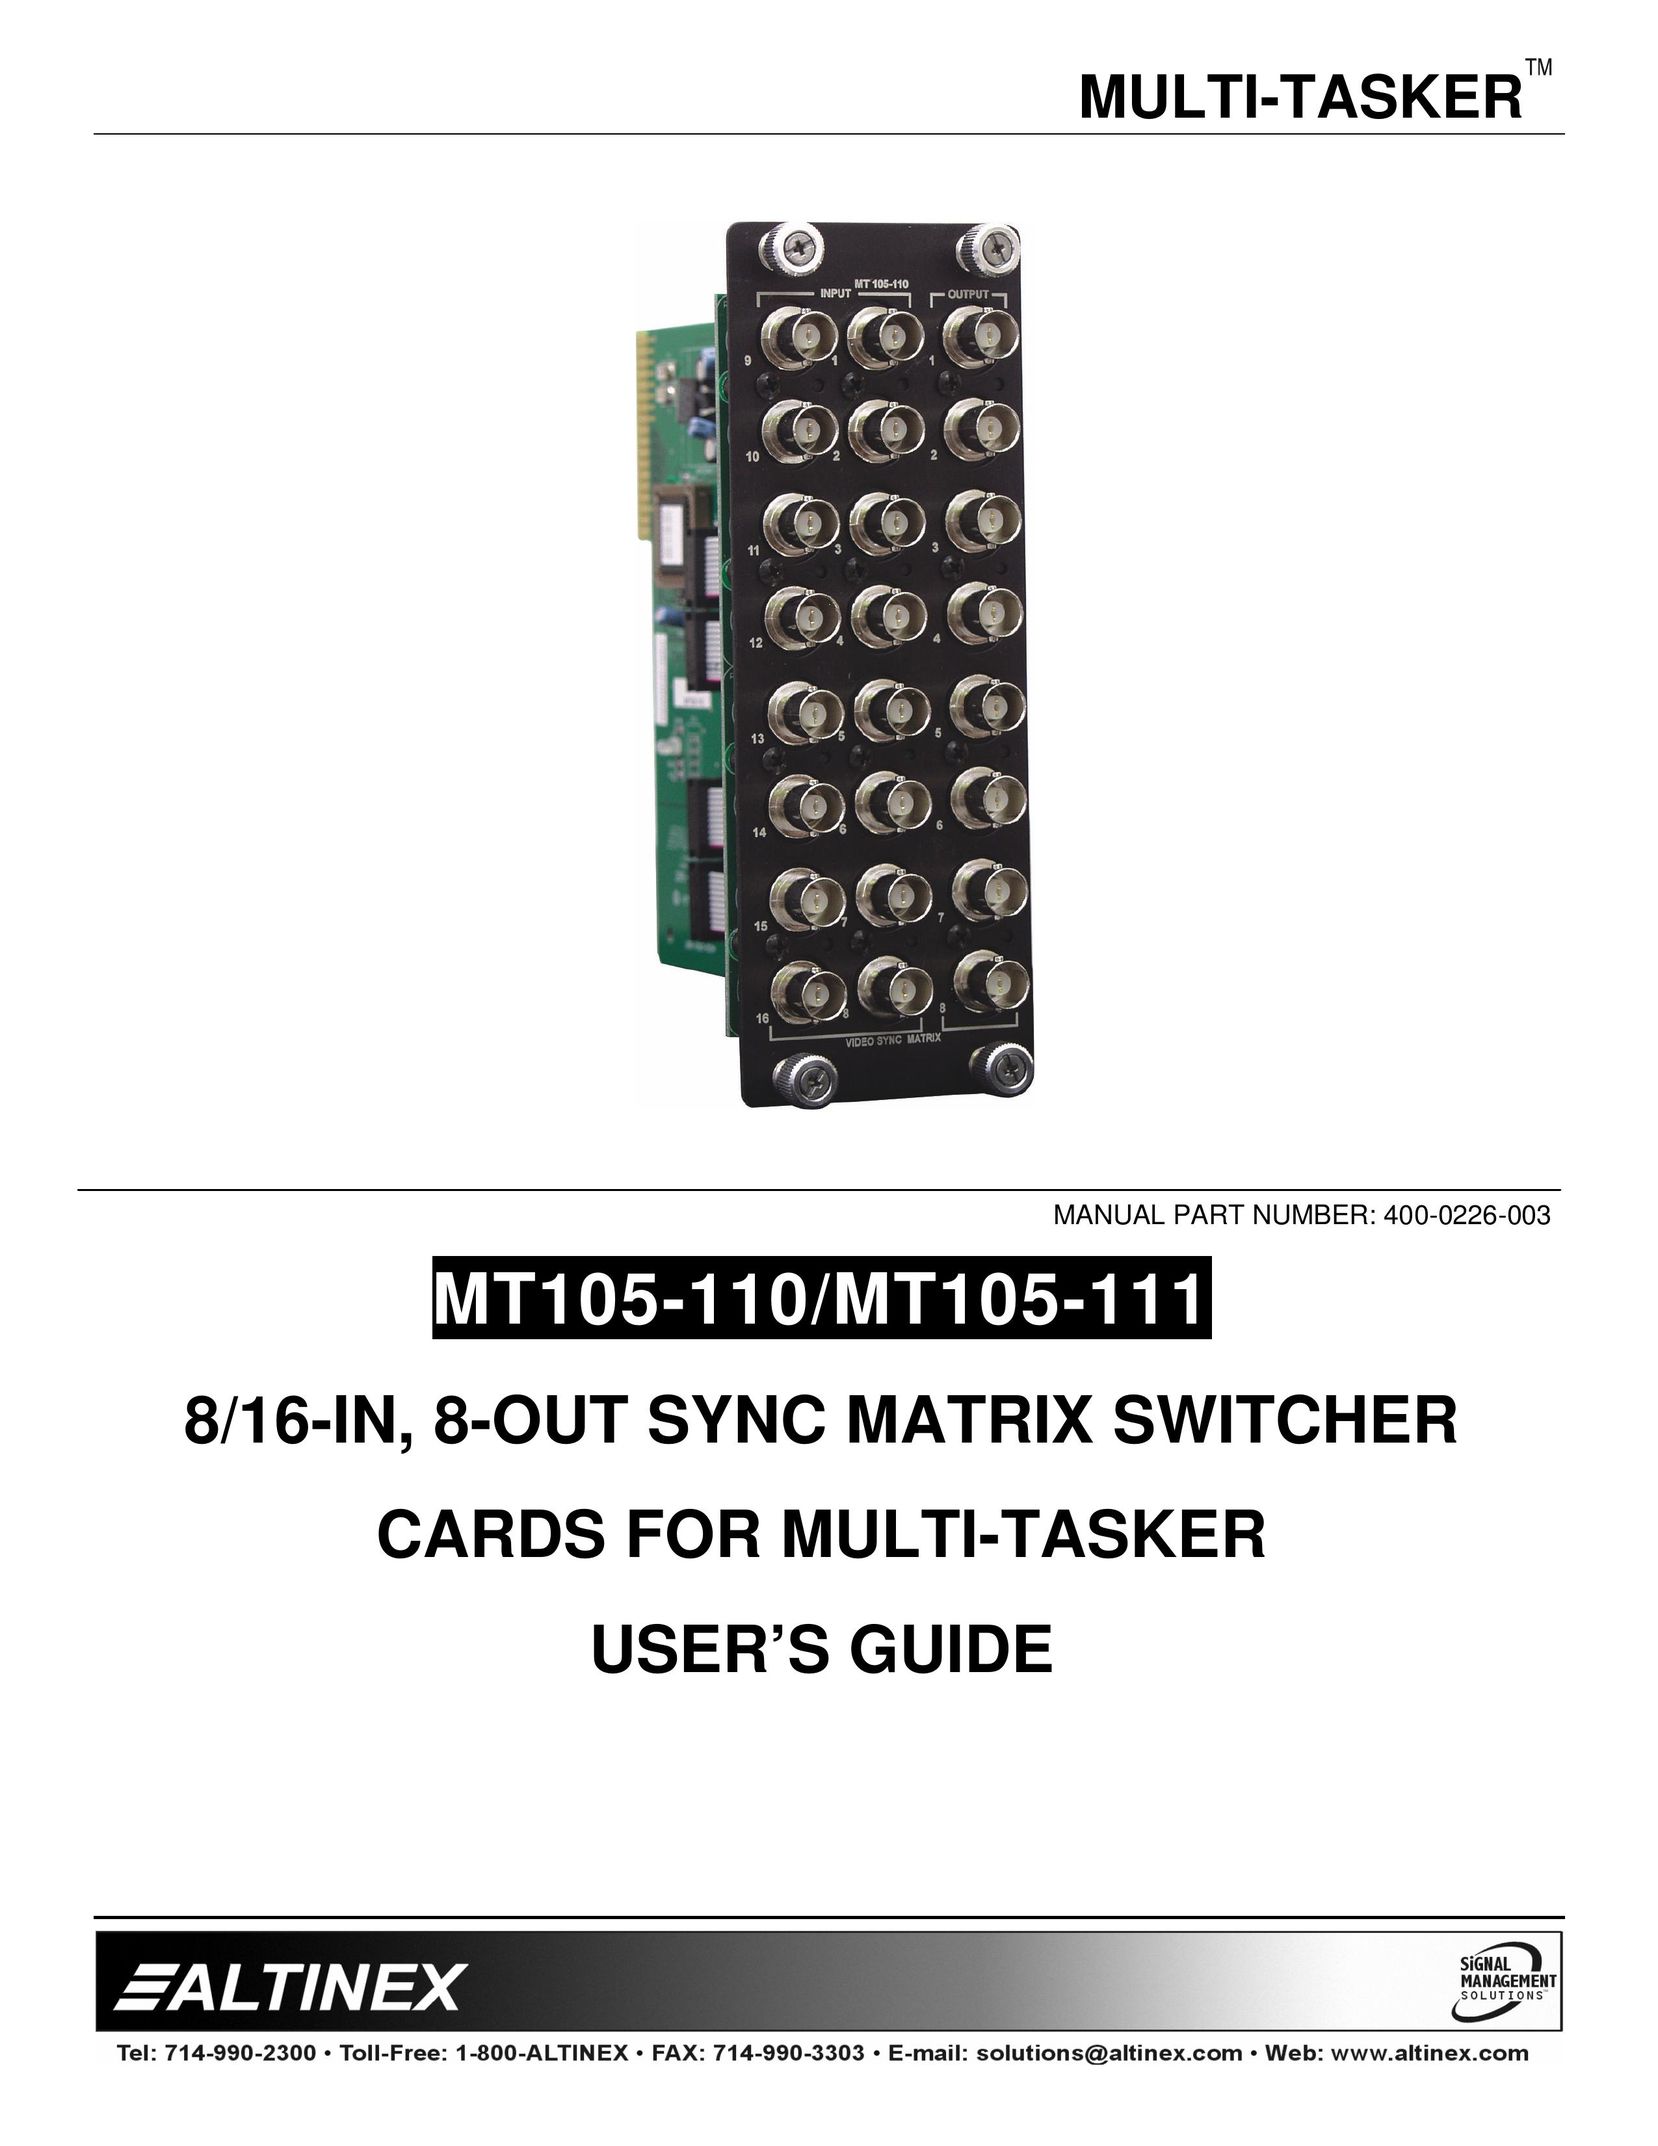 Altinex 400-0226-003 Switch User Manual